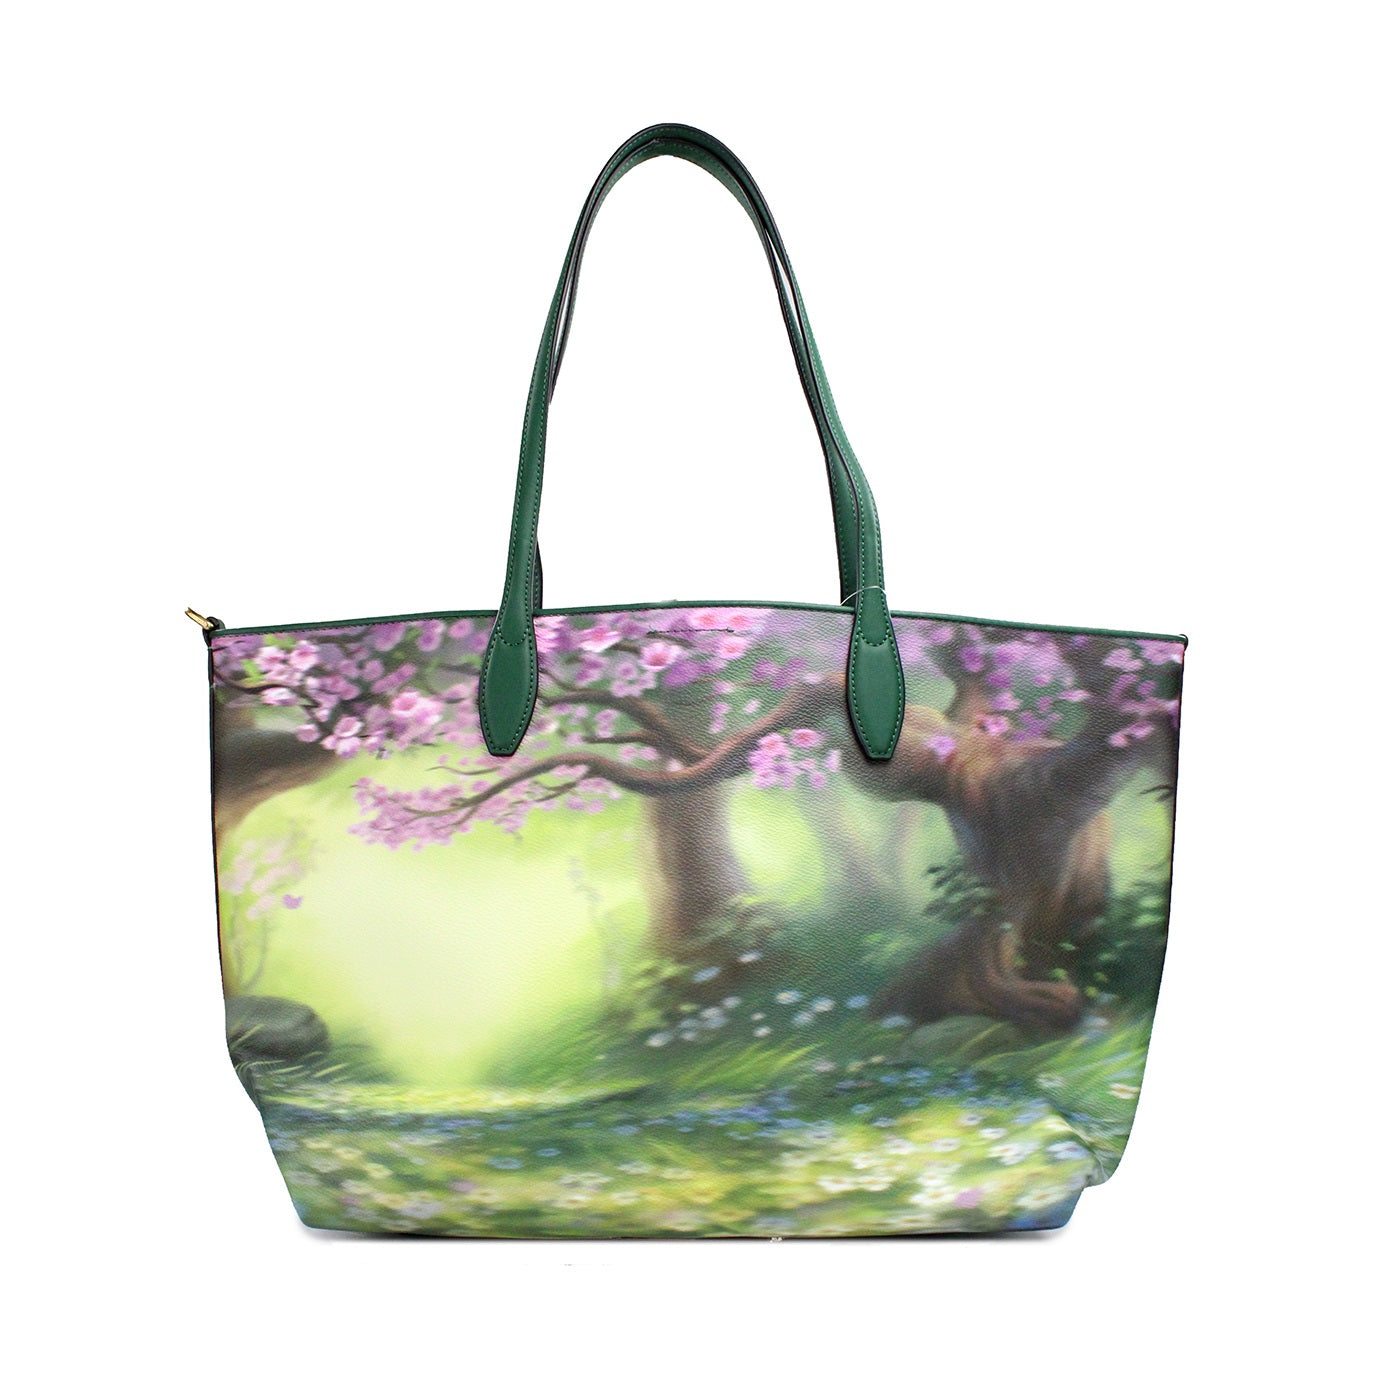 Disney Sutton Bambi Coated Canvas Shoulder Tote Handbag Purse - Divitiae Glamour